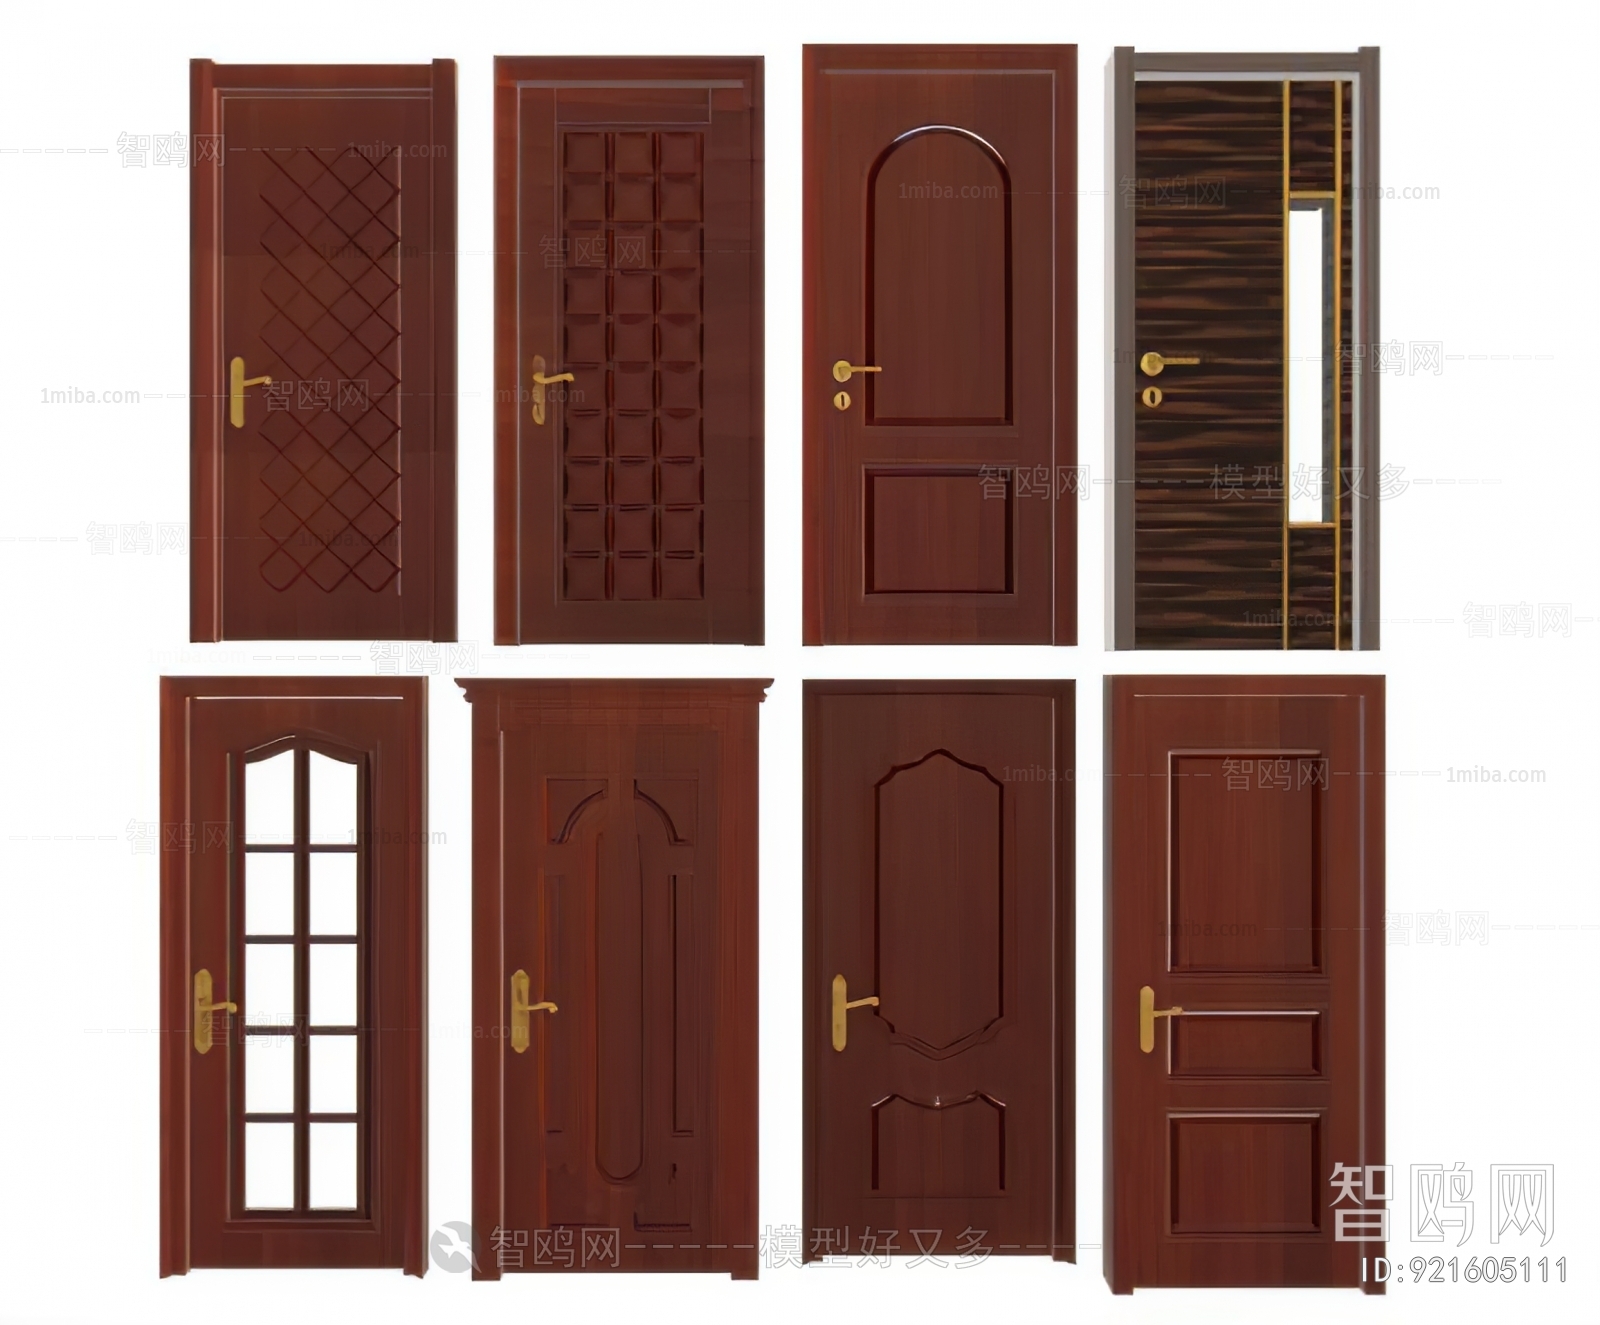 New Classical Style Single Door